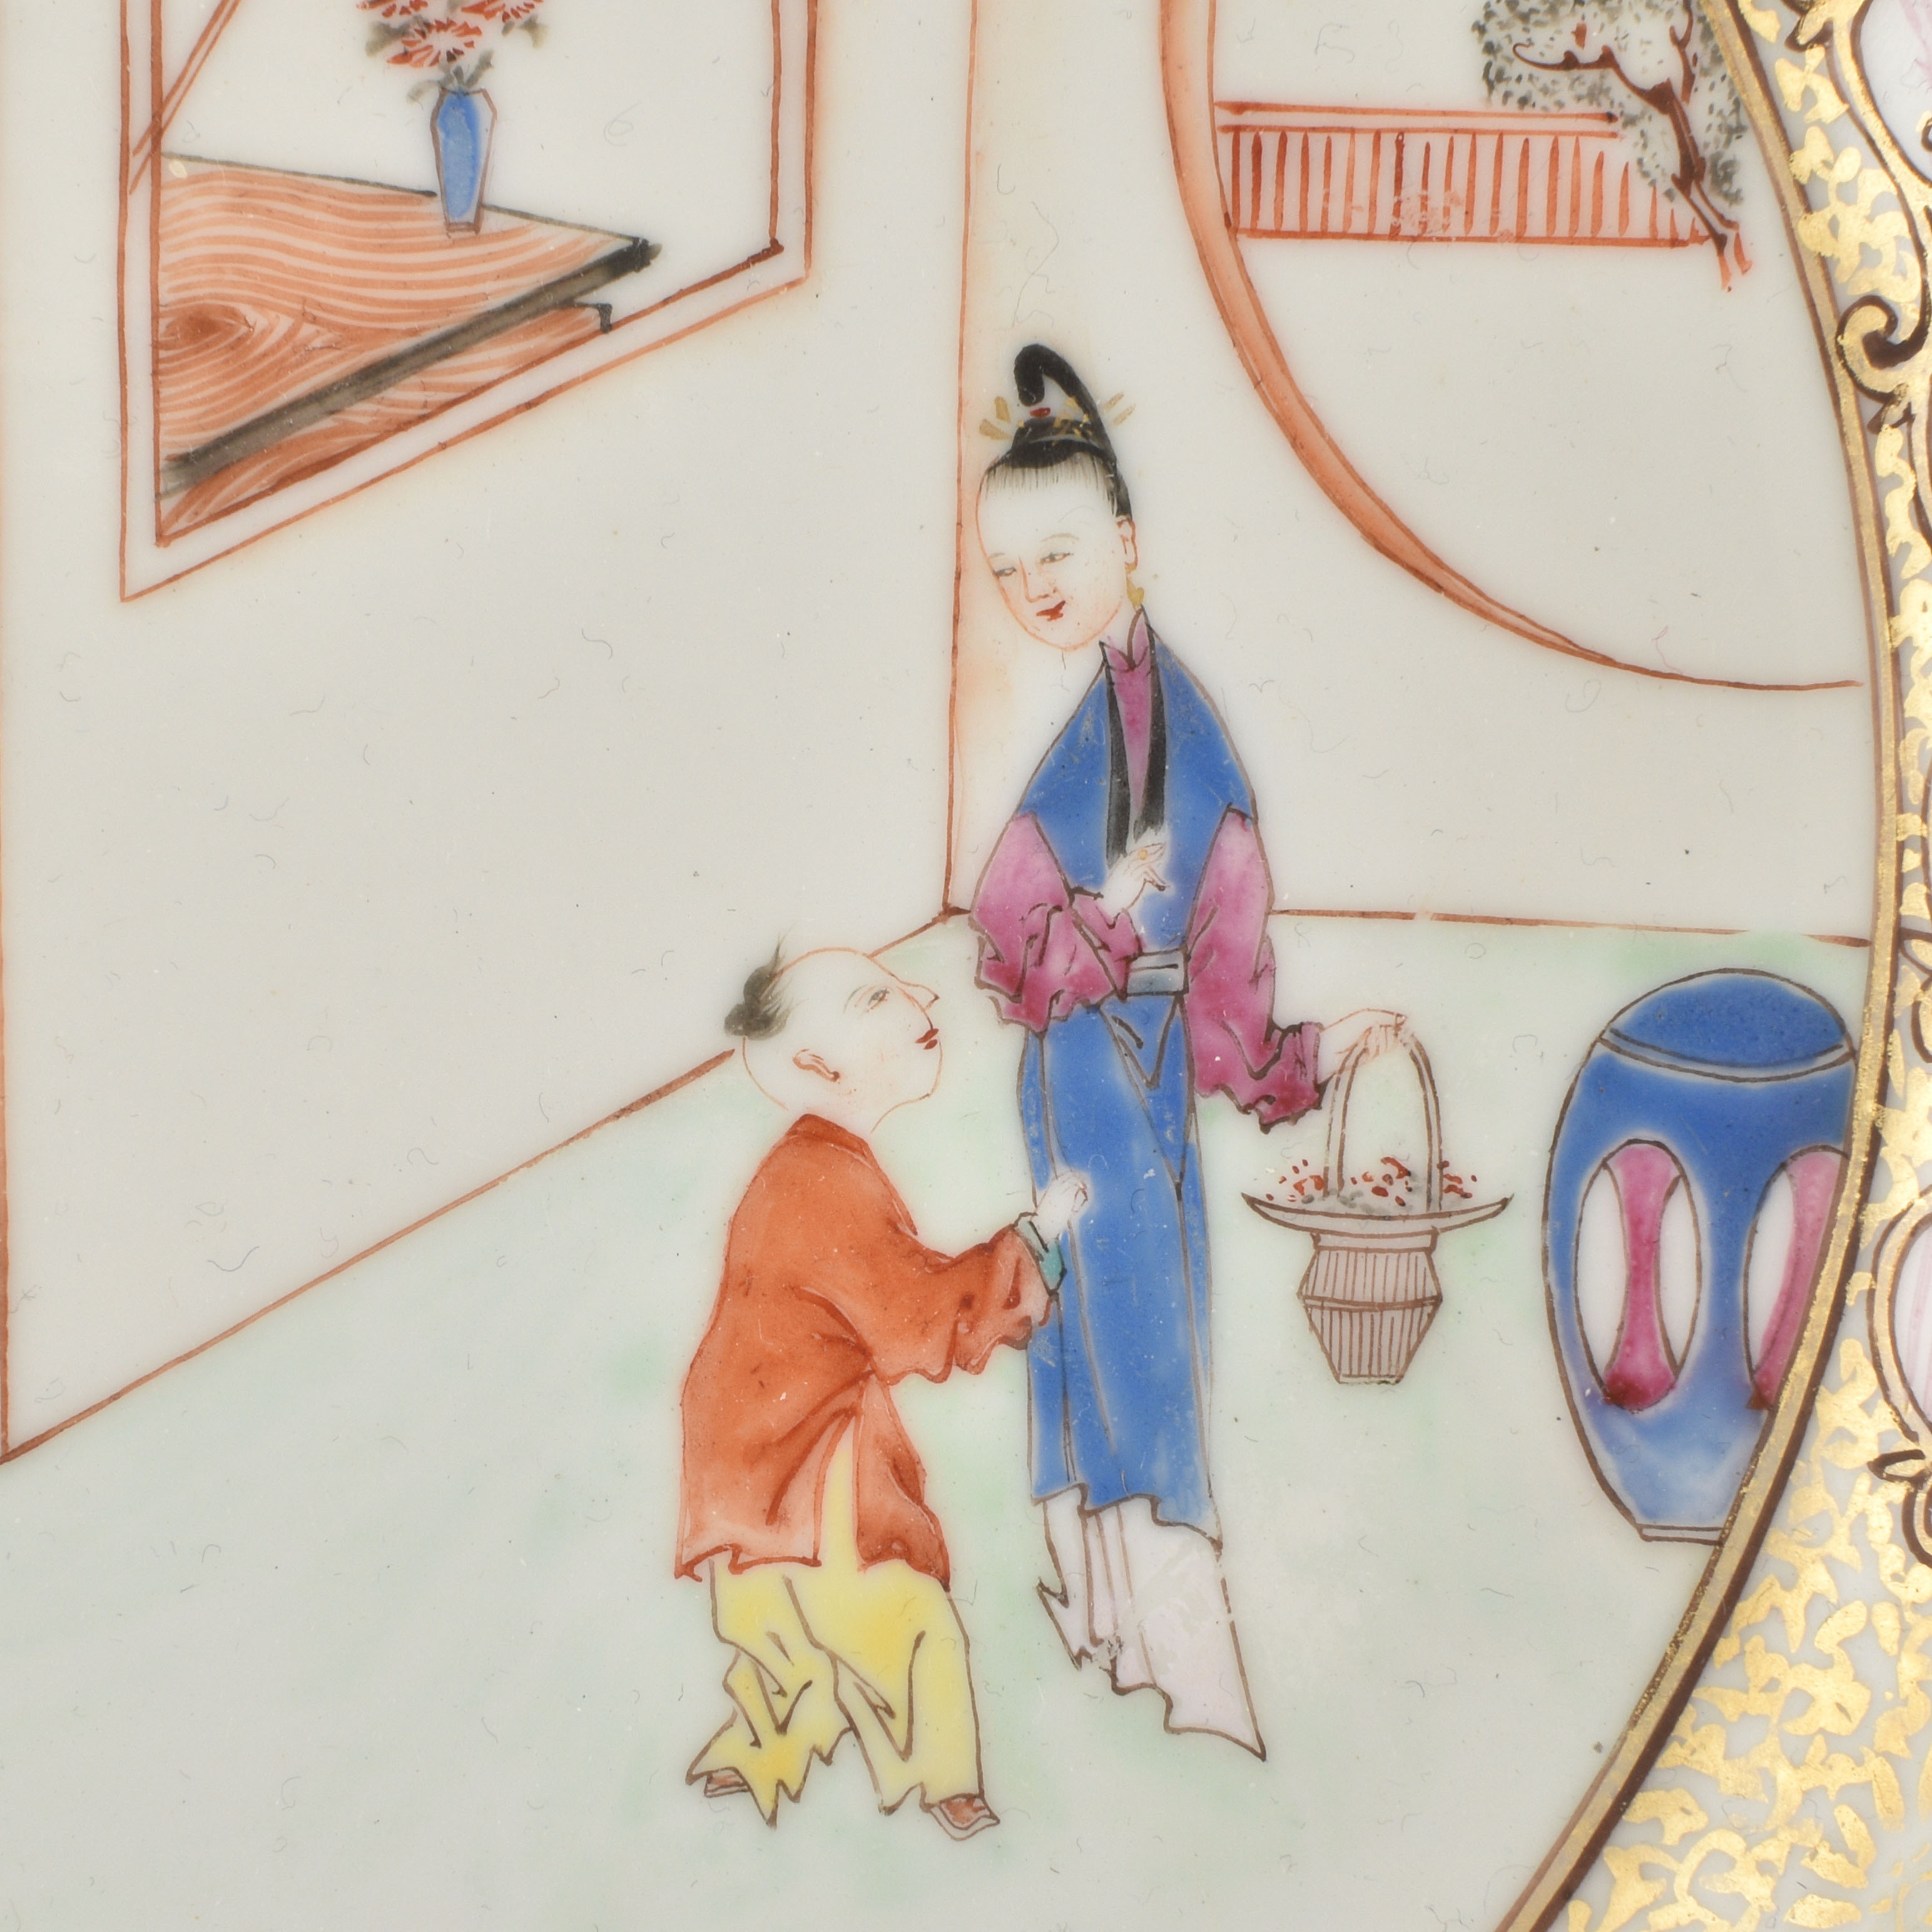 Porcelaine Qianlong (1735-1795), circa 1750/1760, Chine